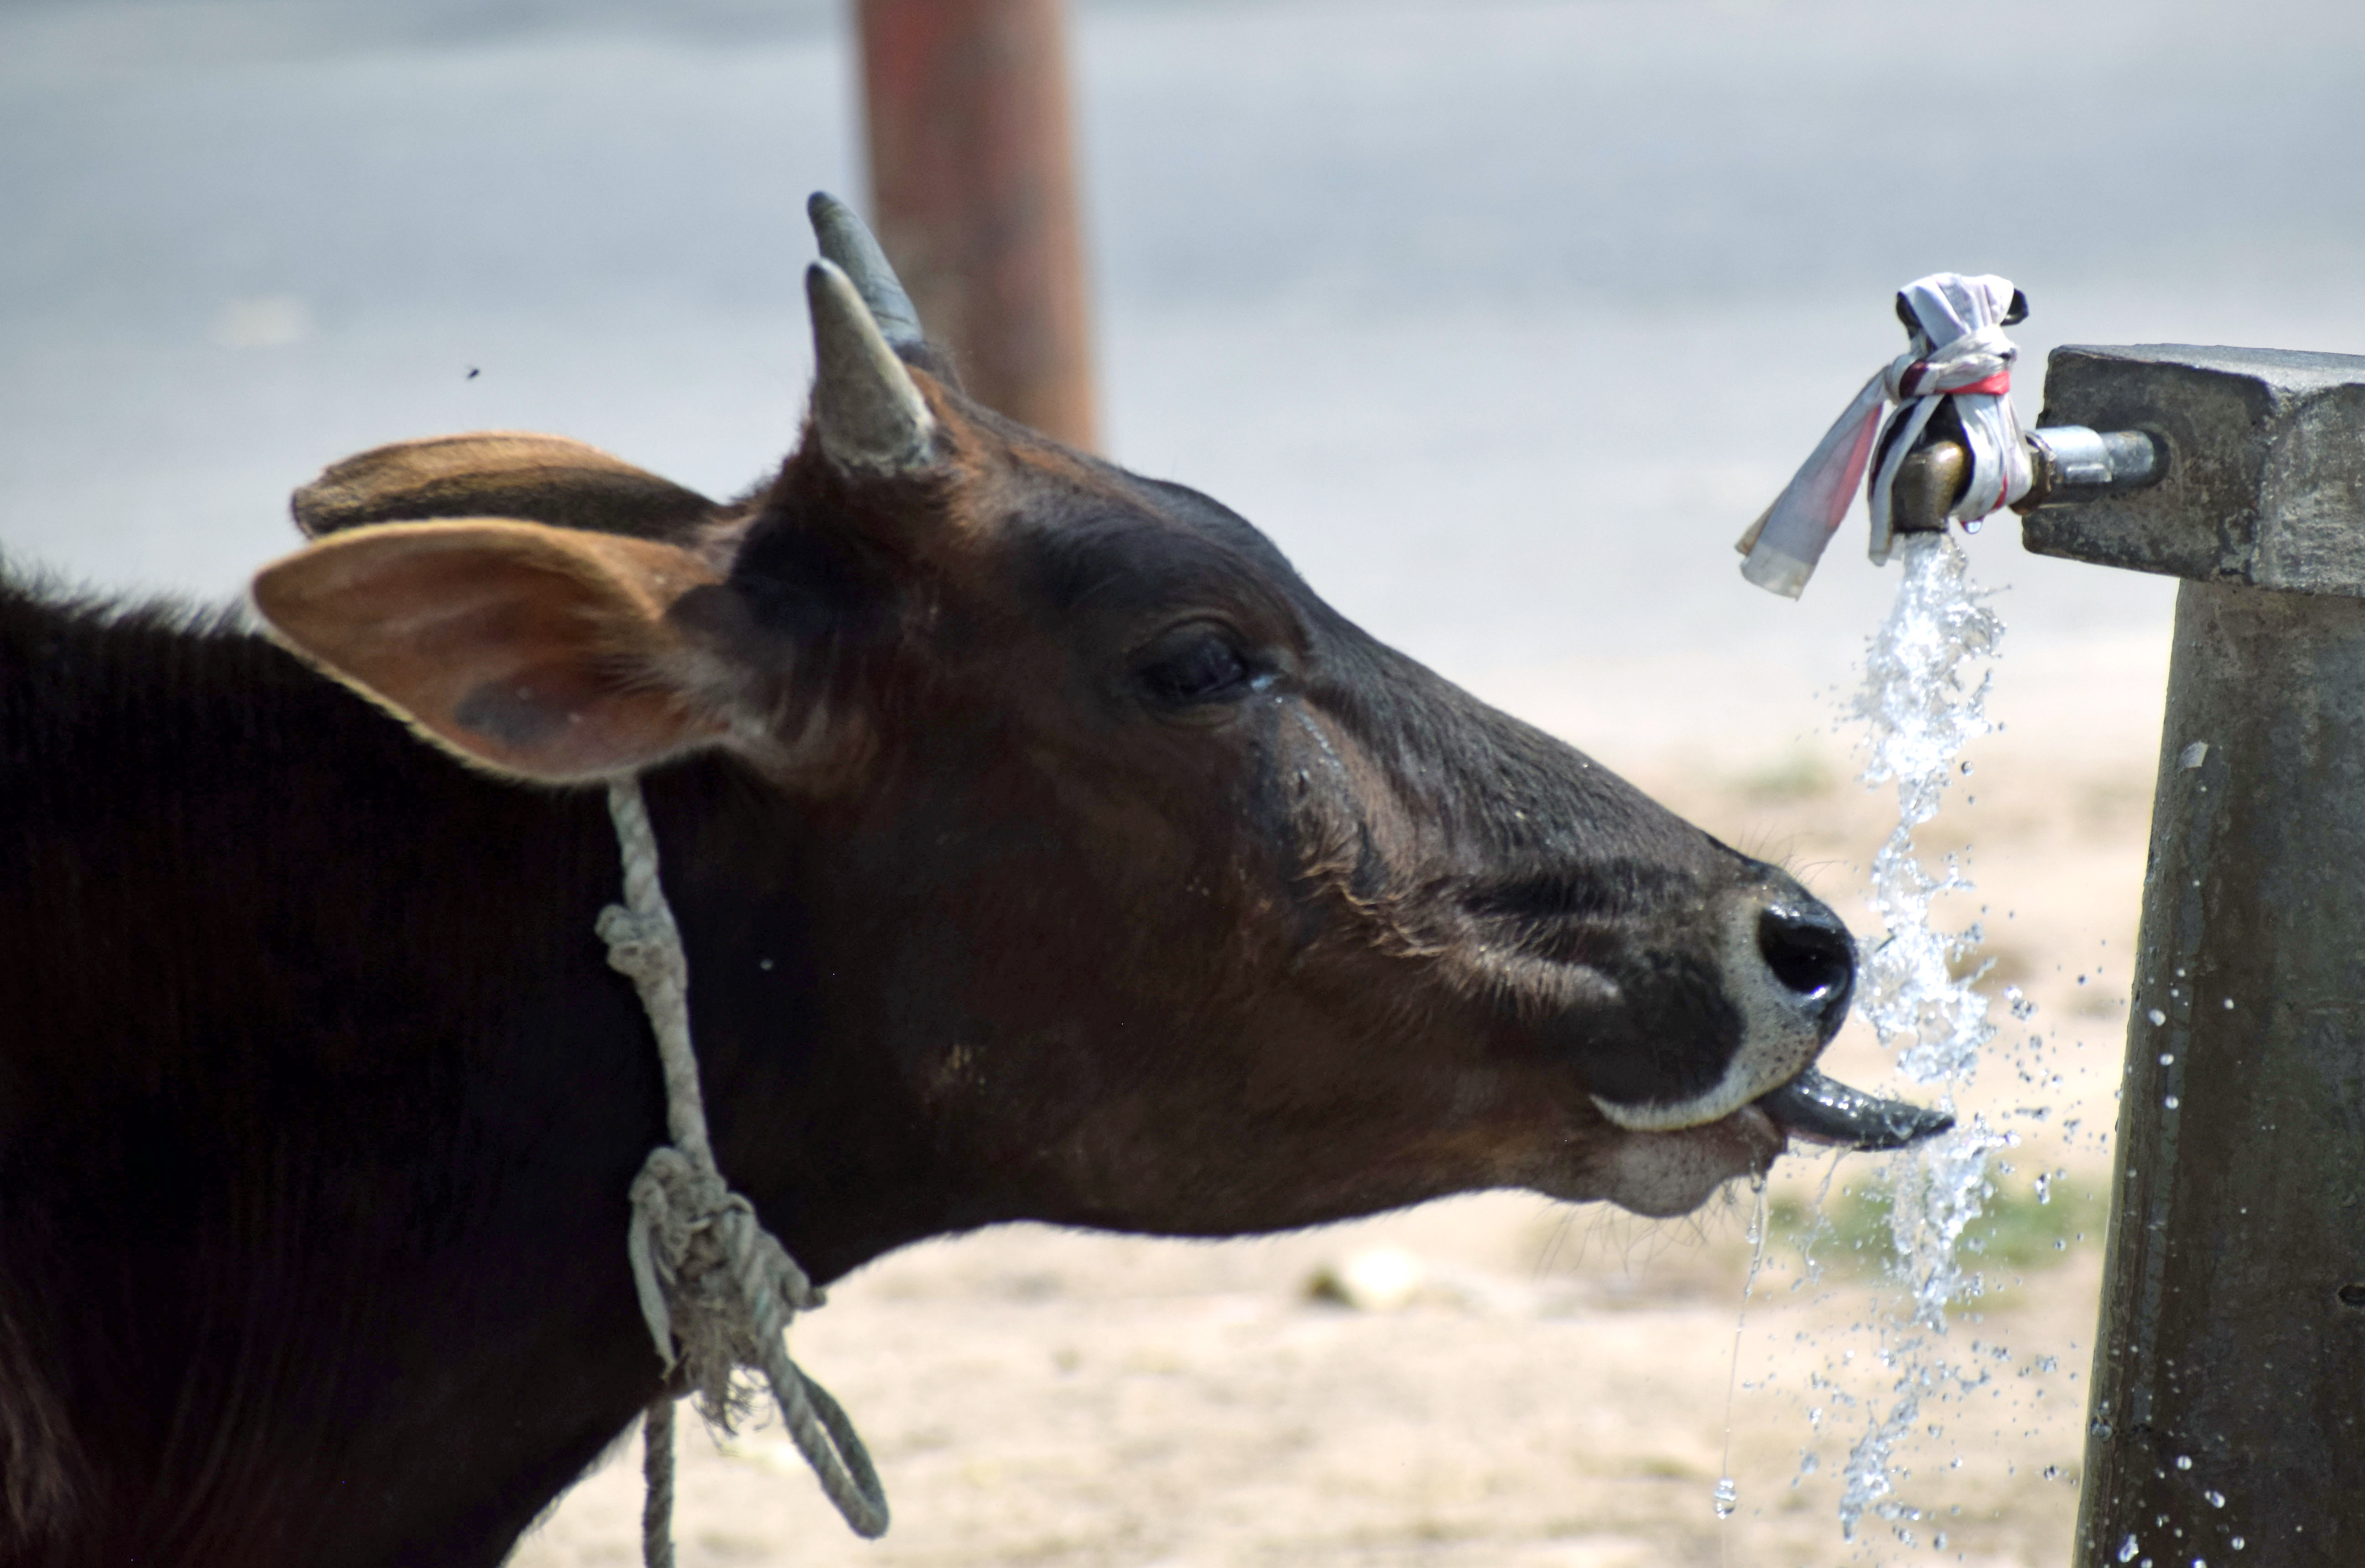 Dairy farming booms in Bandipora district of J&K